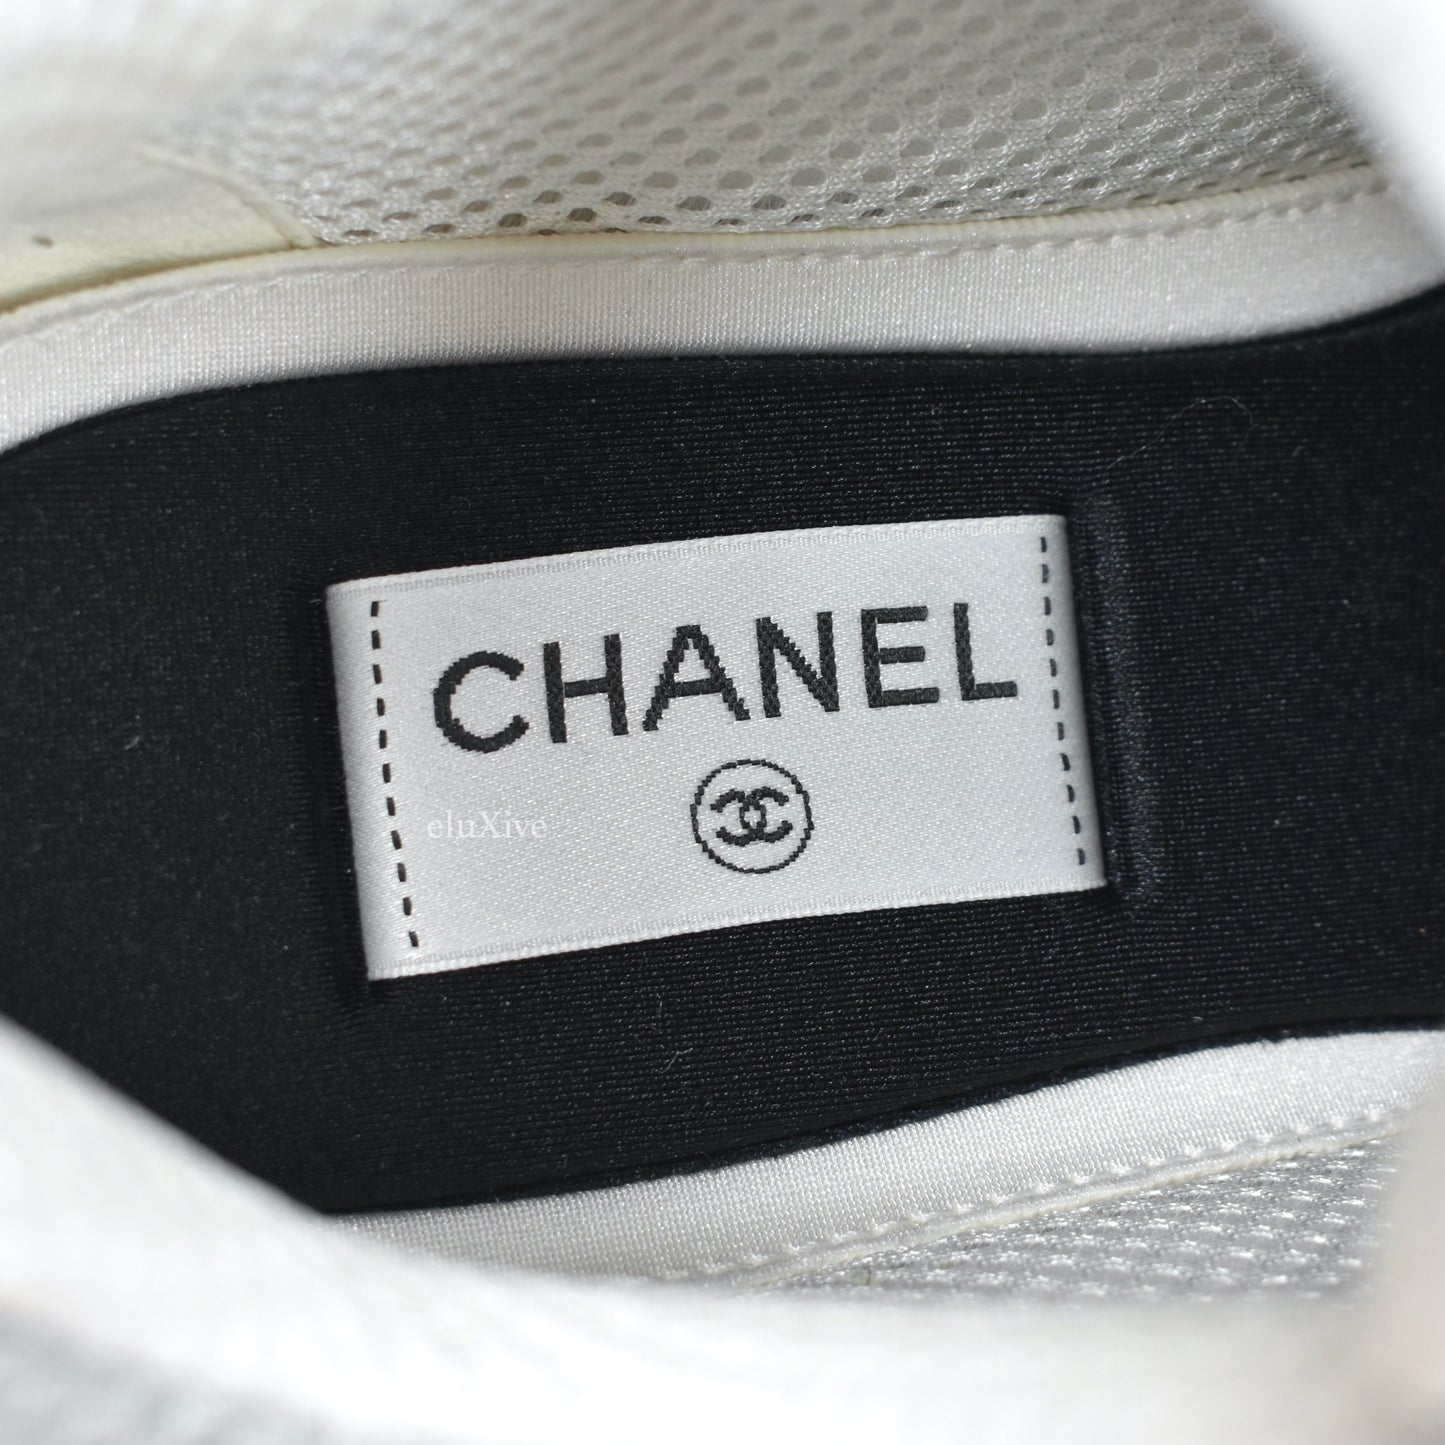 Chanel - Classic Monogram Logo Trainer (Metallic Silver)